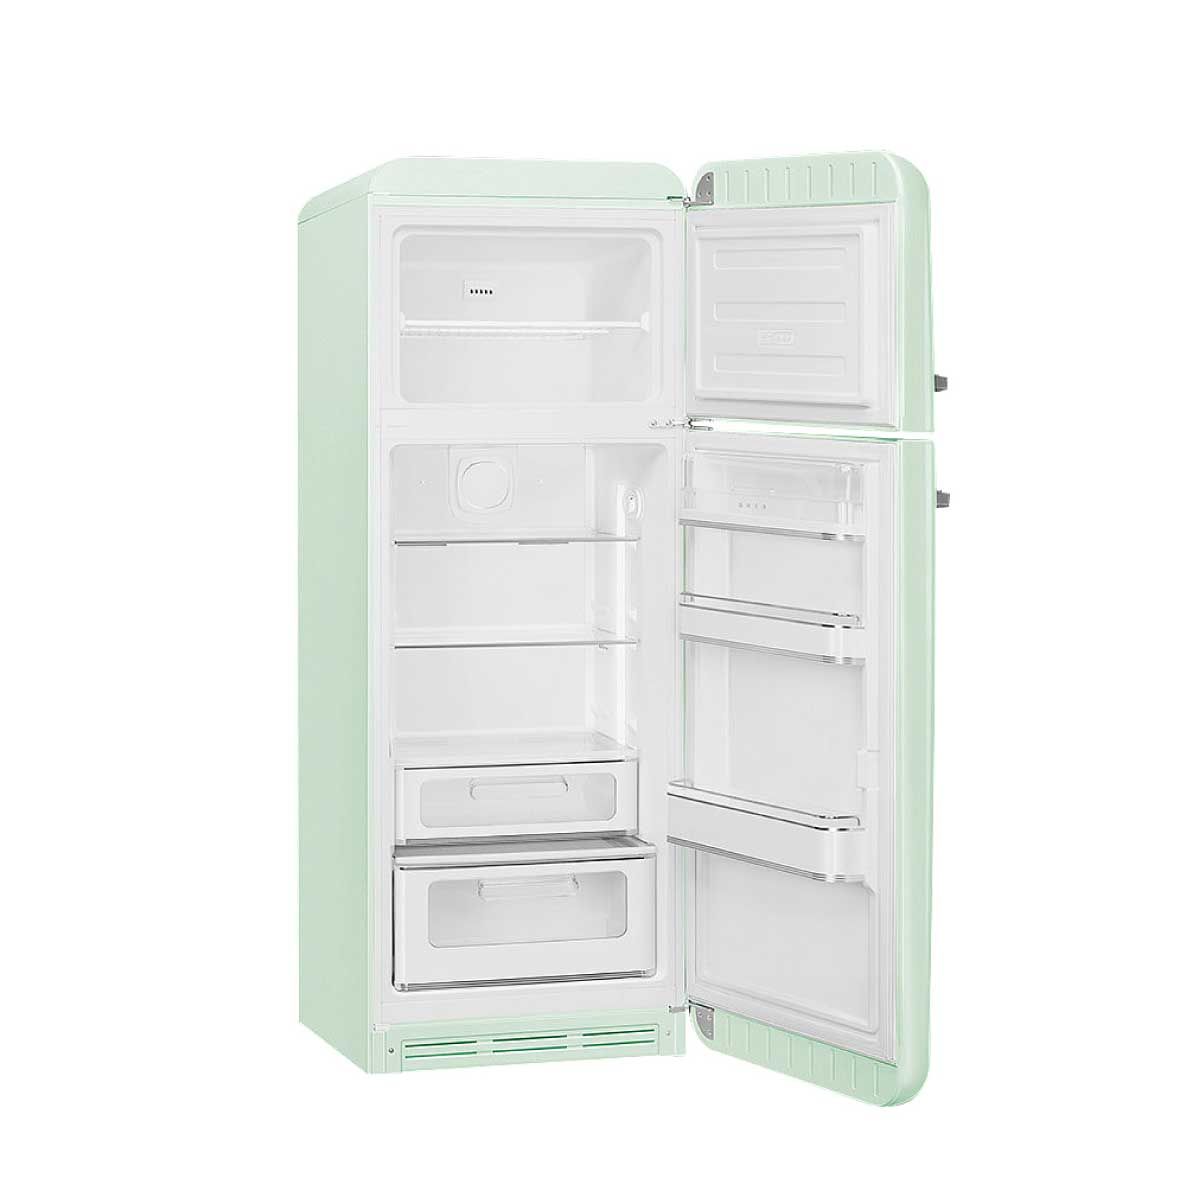 SMEG ตู้เย็น 2 ประตู 10.38 Q.สไตล์ 50  Retro รุ่น FAB30RPG5 สีเขียวพาสเทล